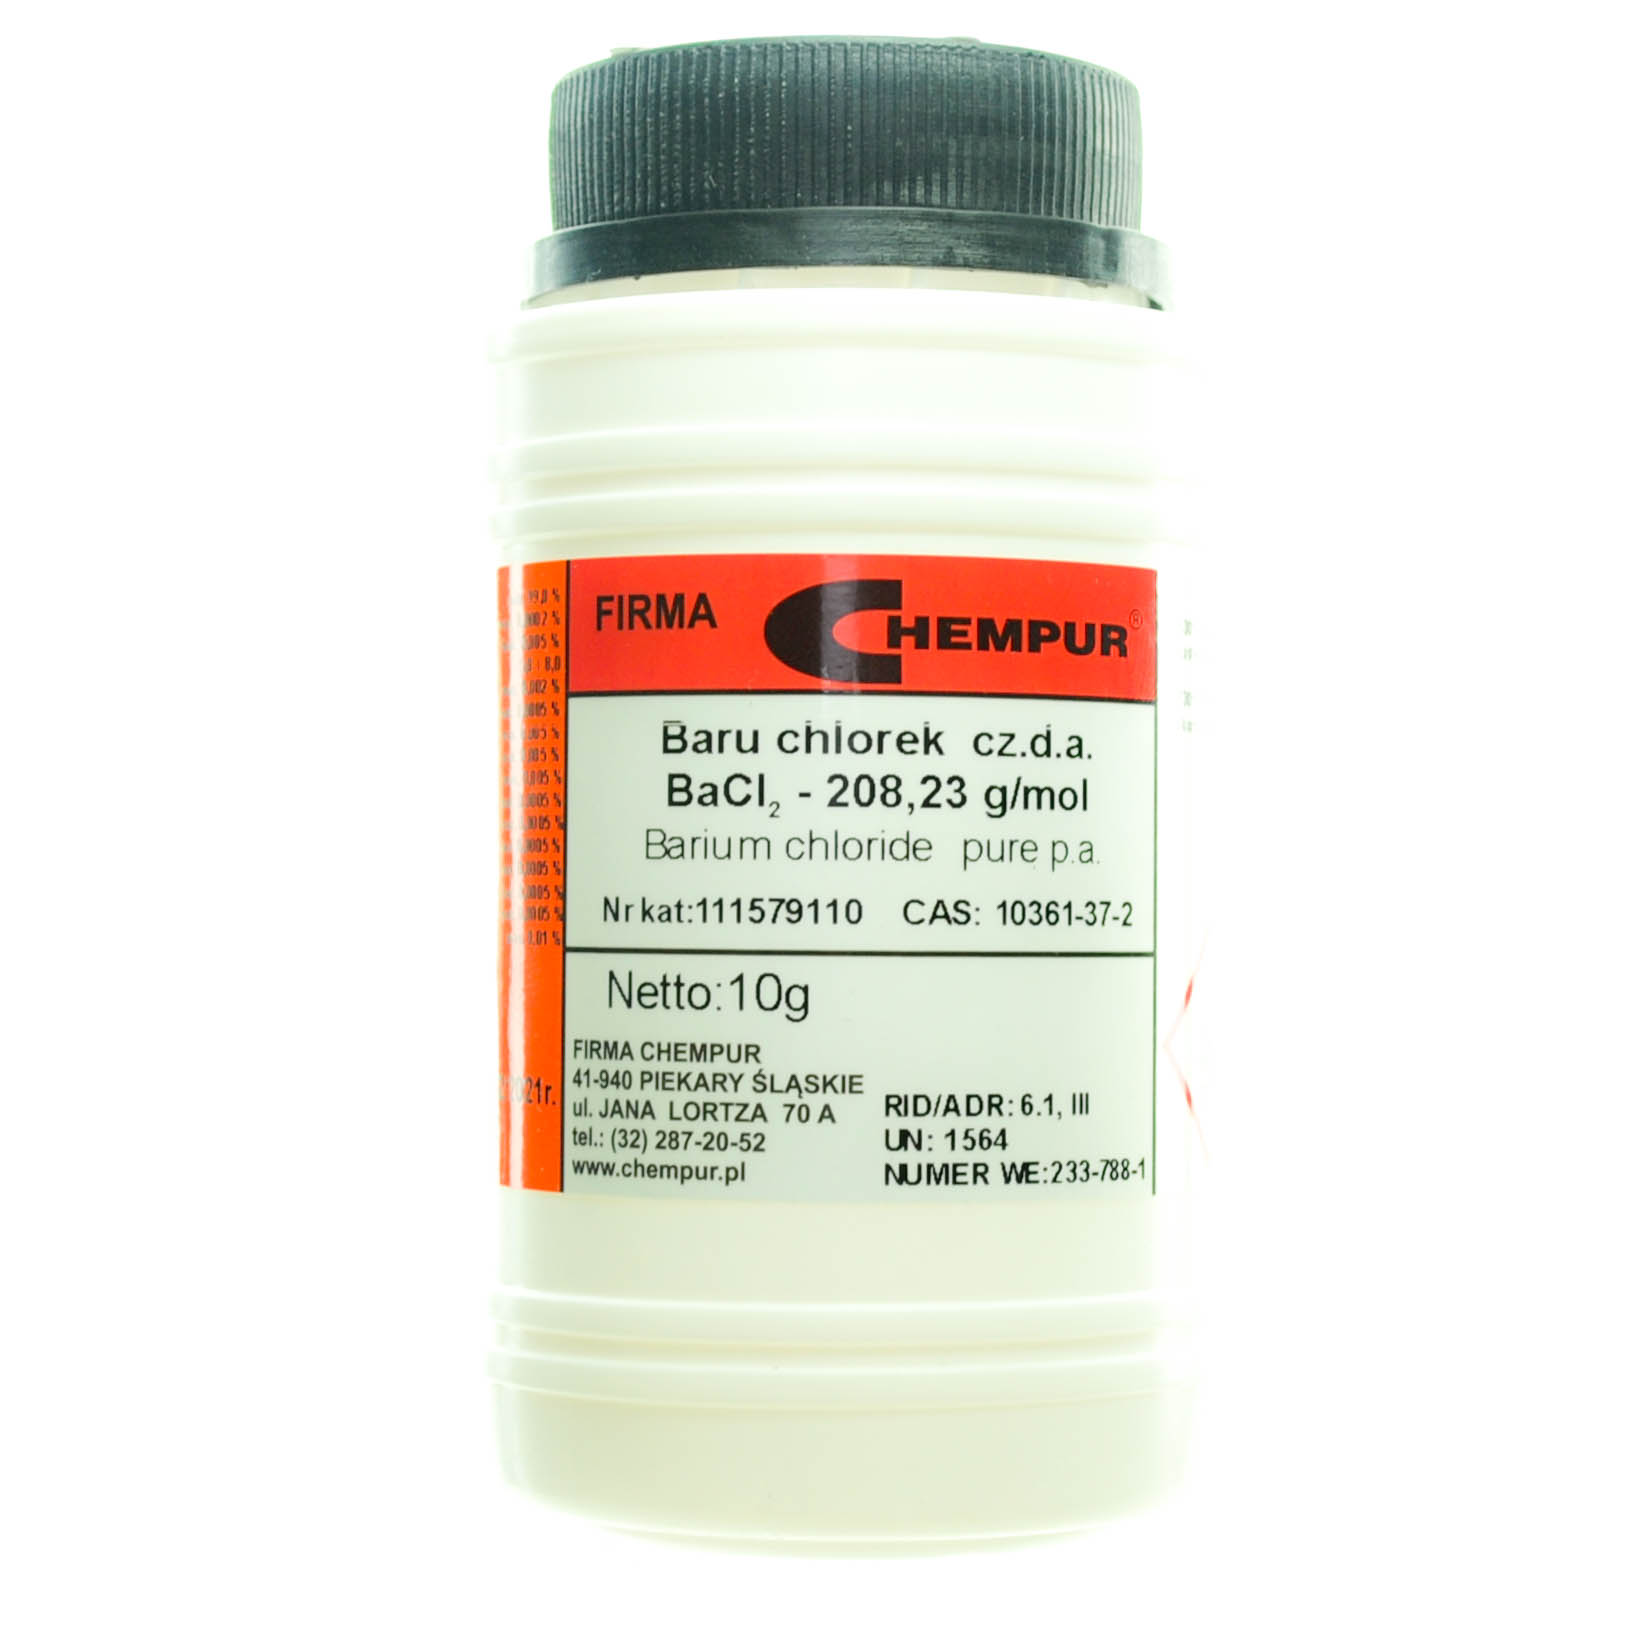 Barium chloride pure p.a.